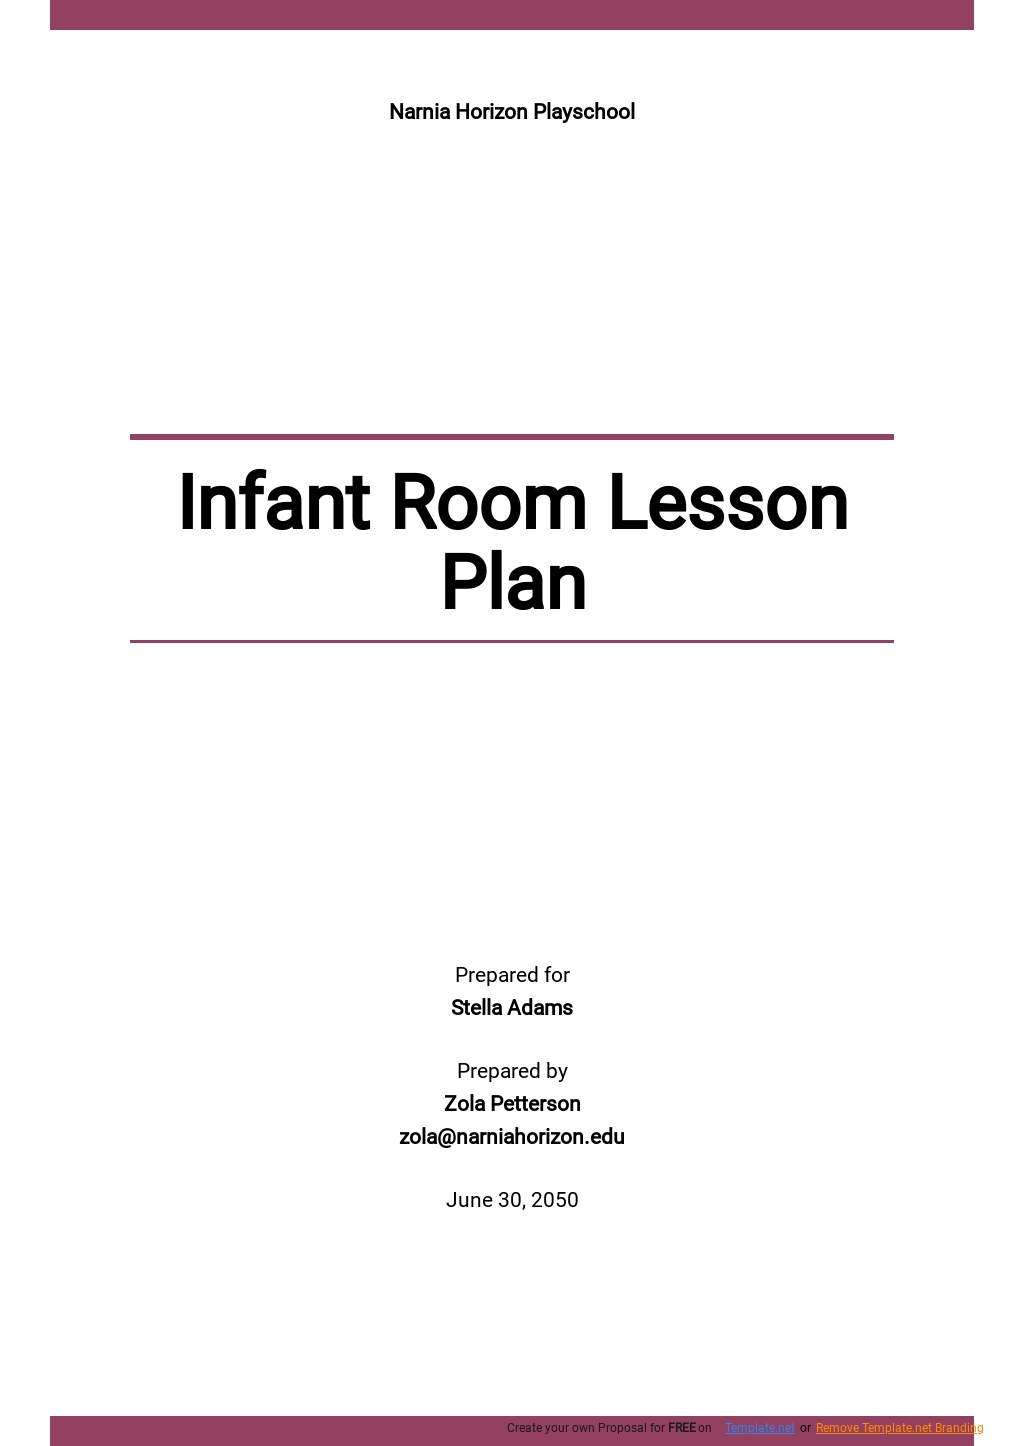 Infant Room Lesson Plan Template.jpe